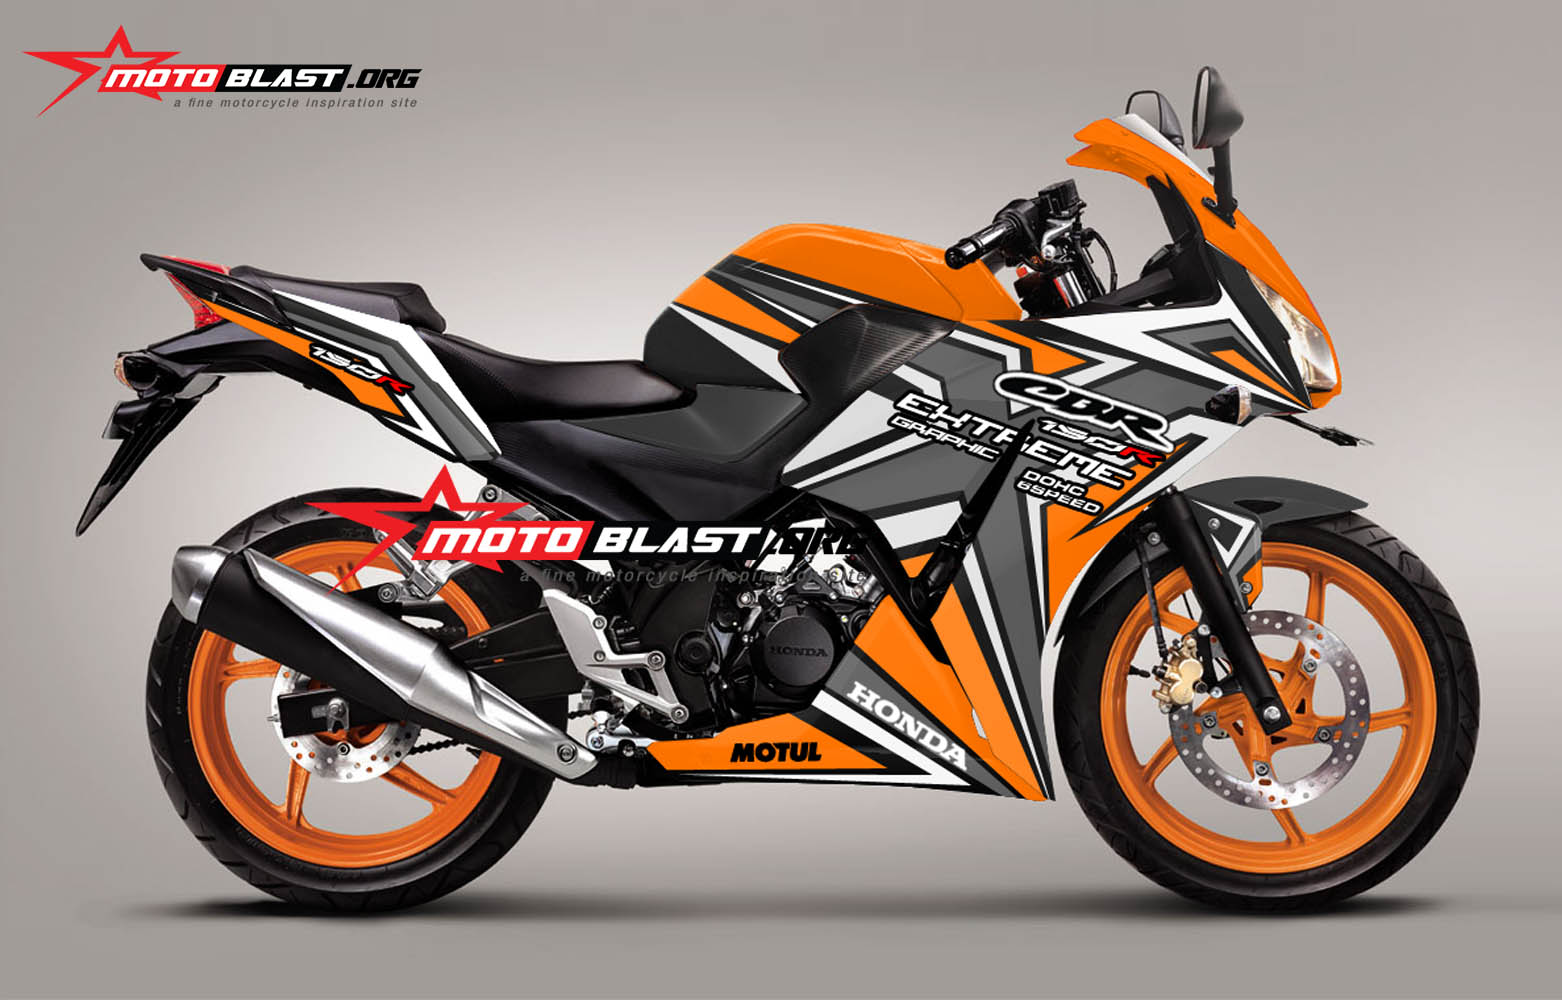 108 Modif Striping Honda Beat Fi Orange Modifikasi Motor Beat